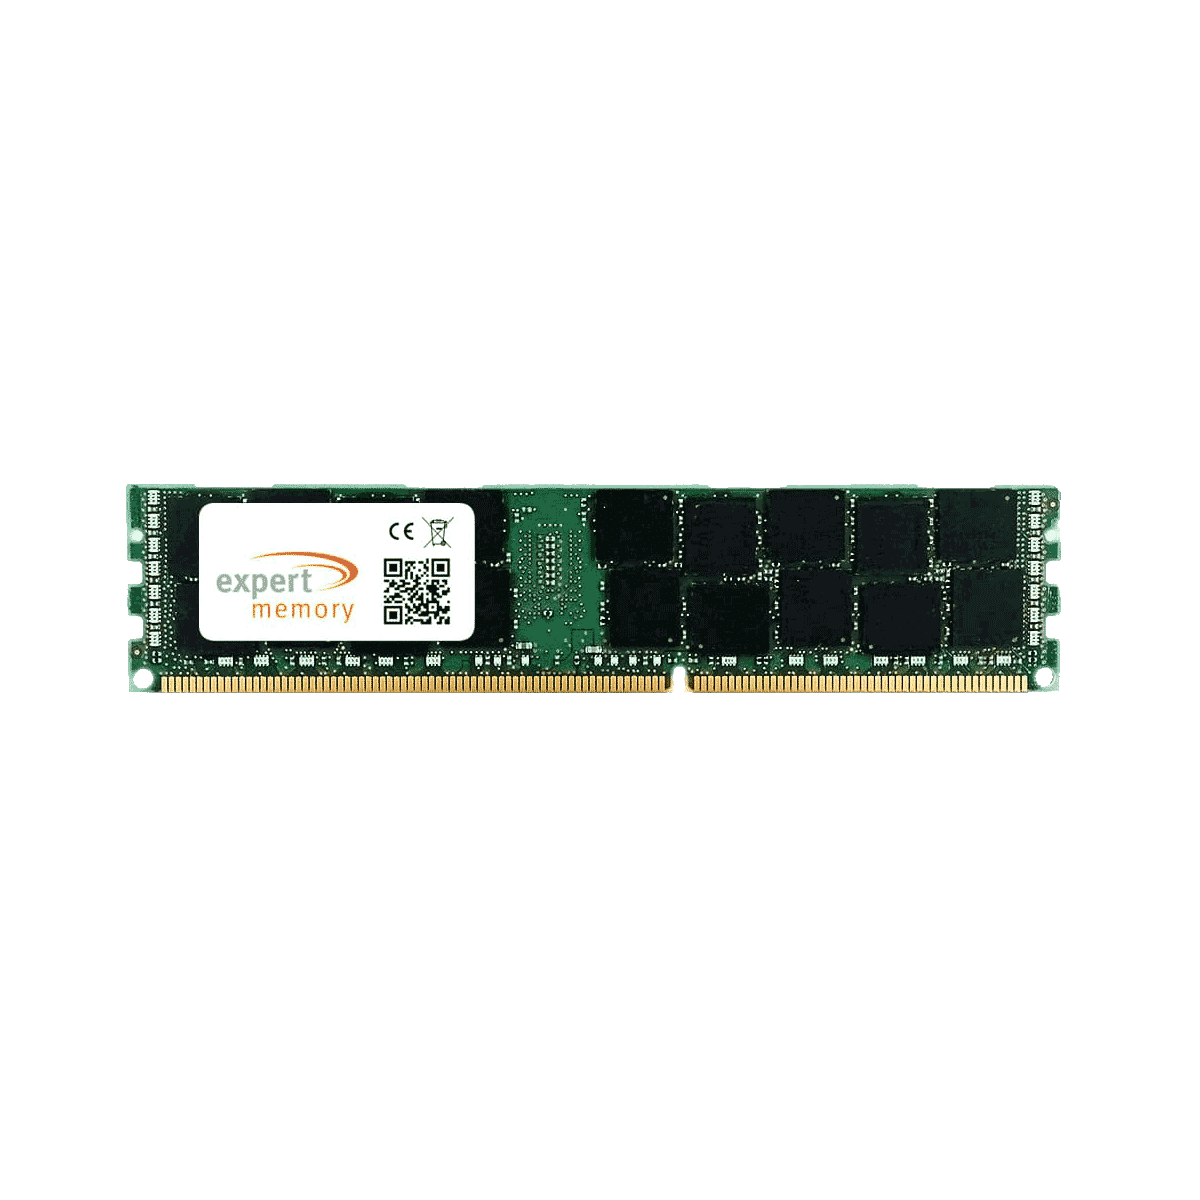 Server EXPERT GB Dell M710 RDIMM 2Rx4 RAM 8GB Upgrade MEMORY 1333 PowerEdge Memory DDR3 8